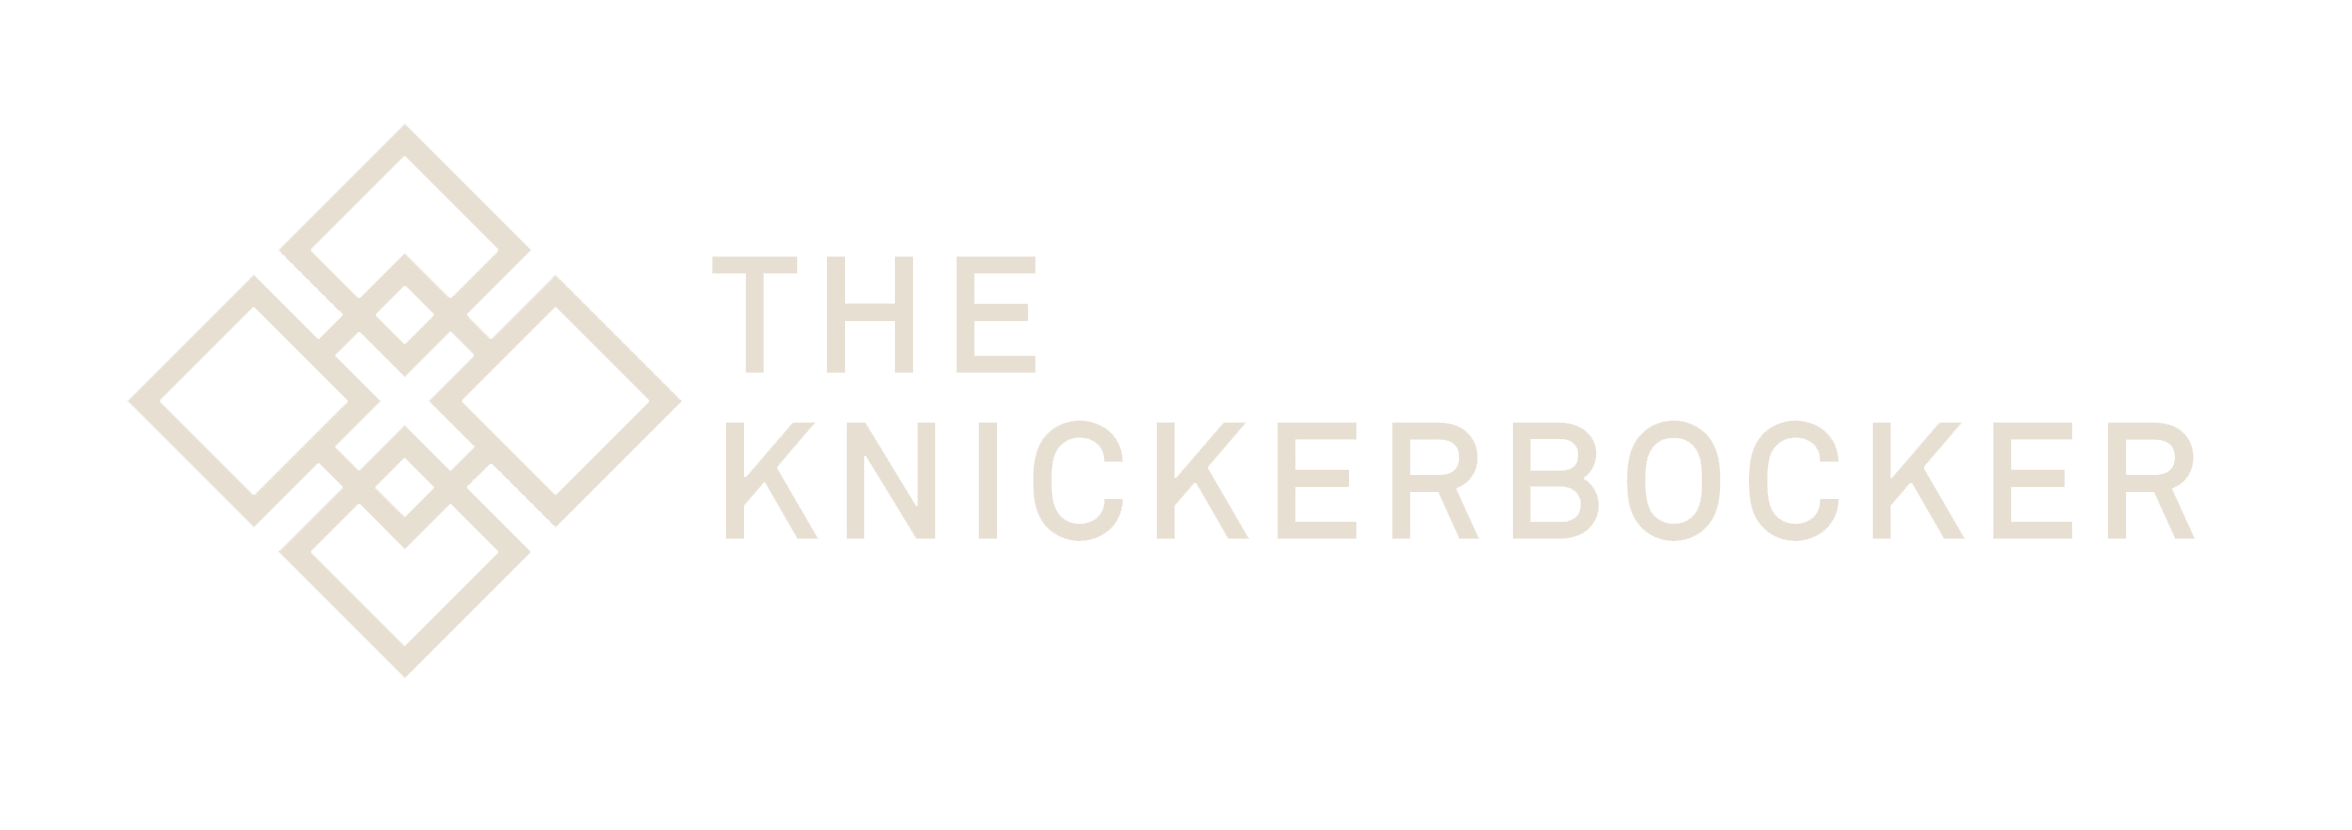 Knickerbocker Logo - Midtown NYC Mini Bar Hotel Package | The Knickerbocker Hotel